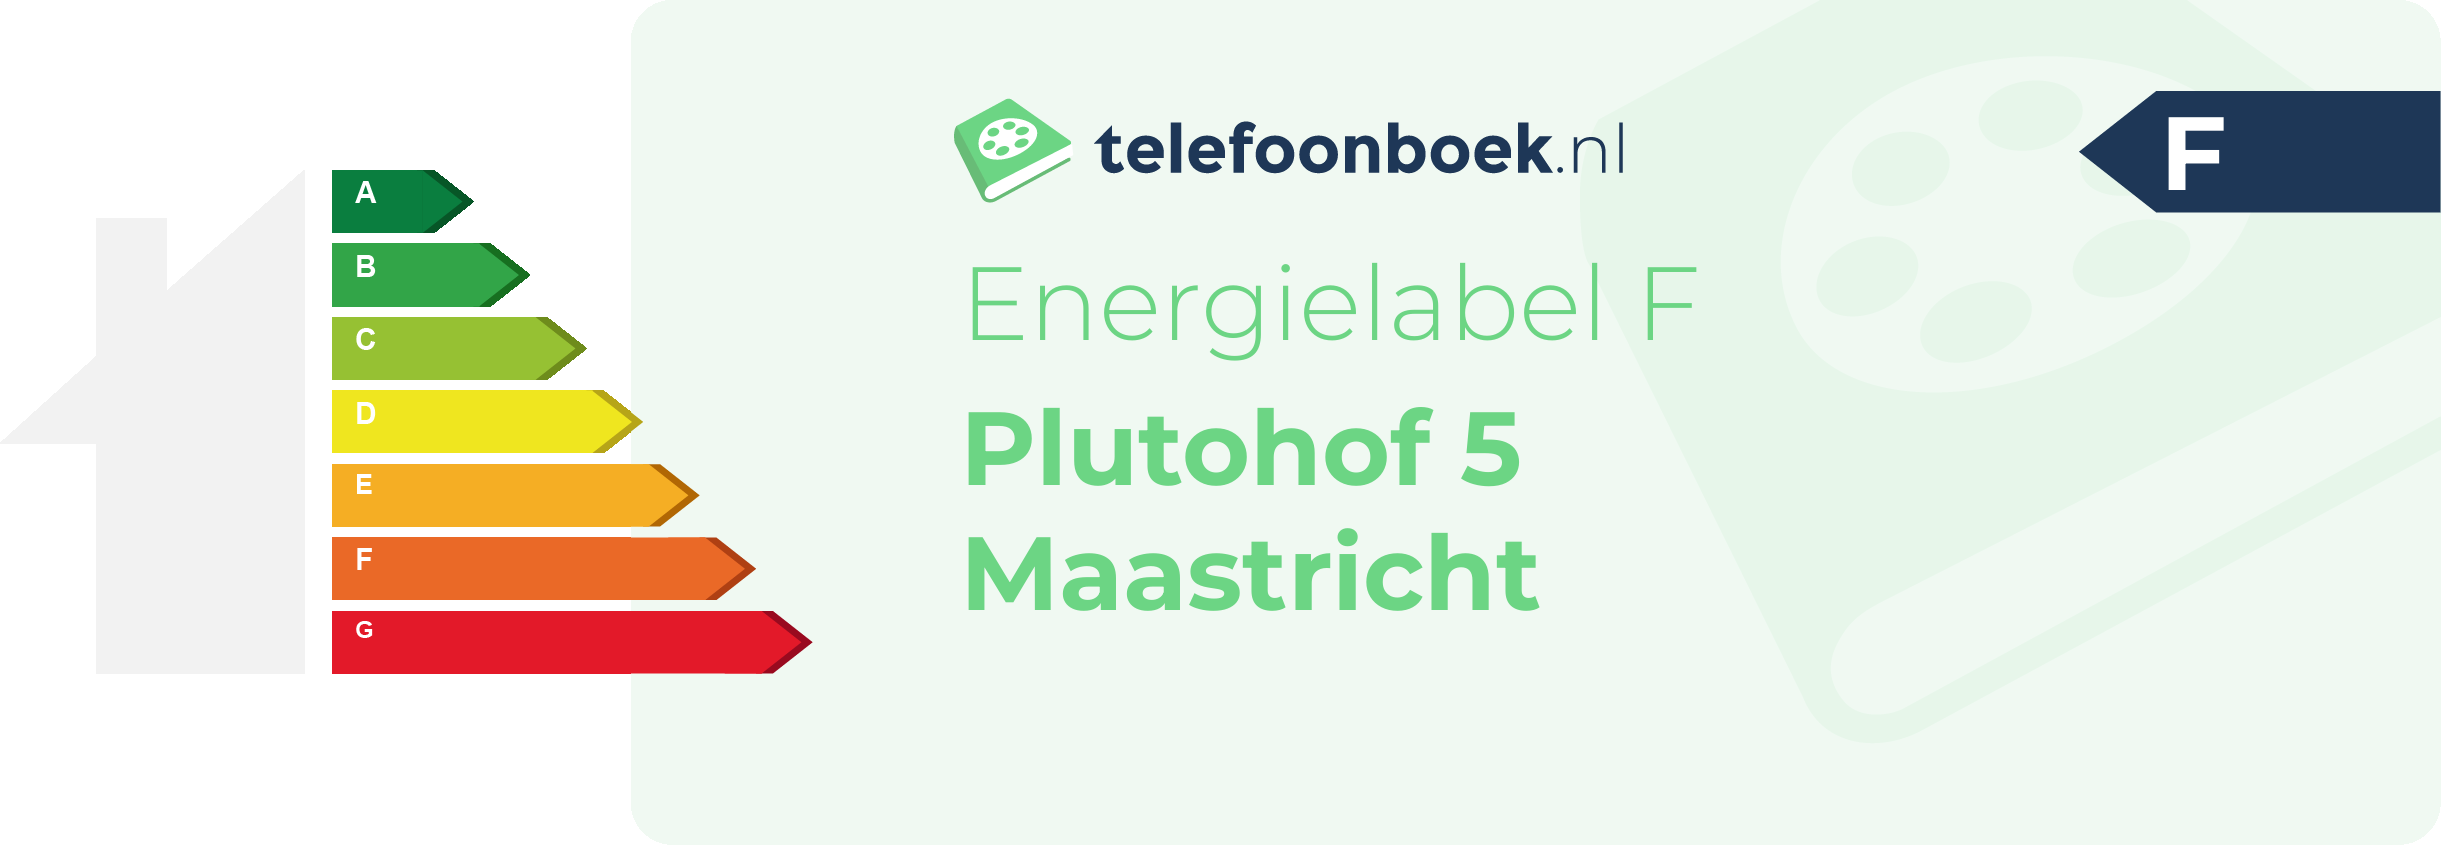 Energielabel Plutohof 5 Maastricht